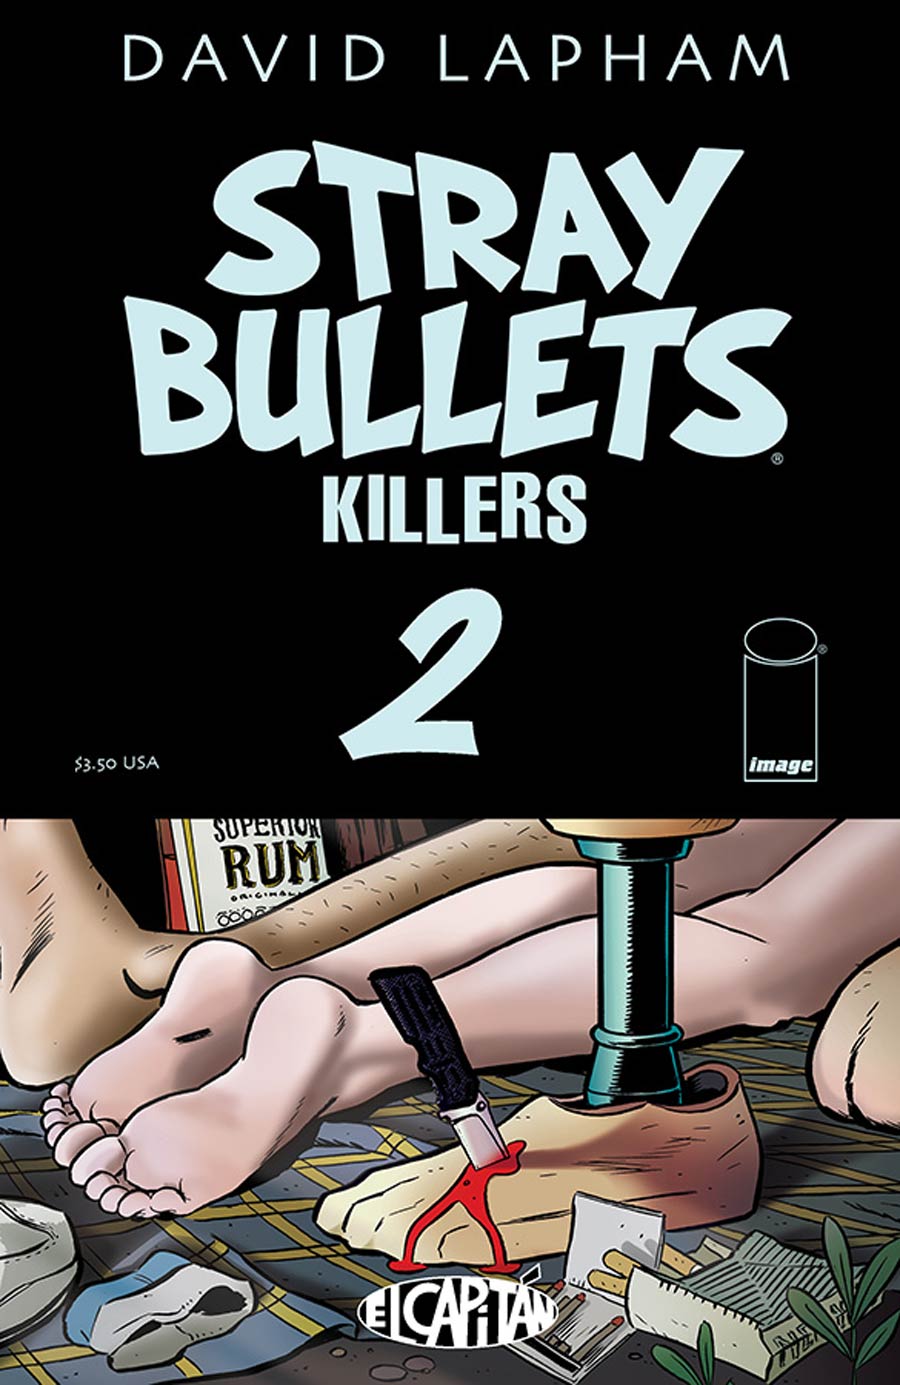 Stray Bullets Killers #2